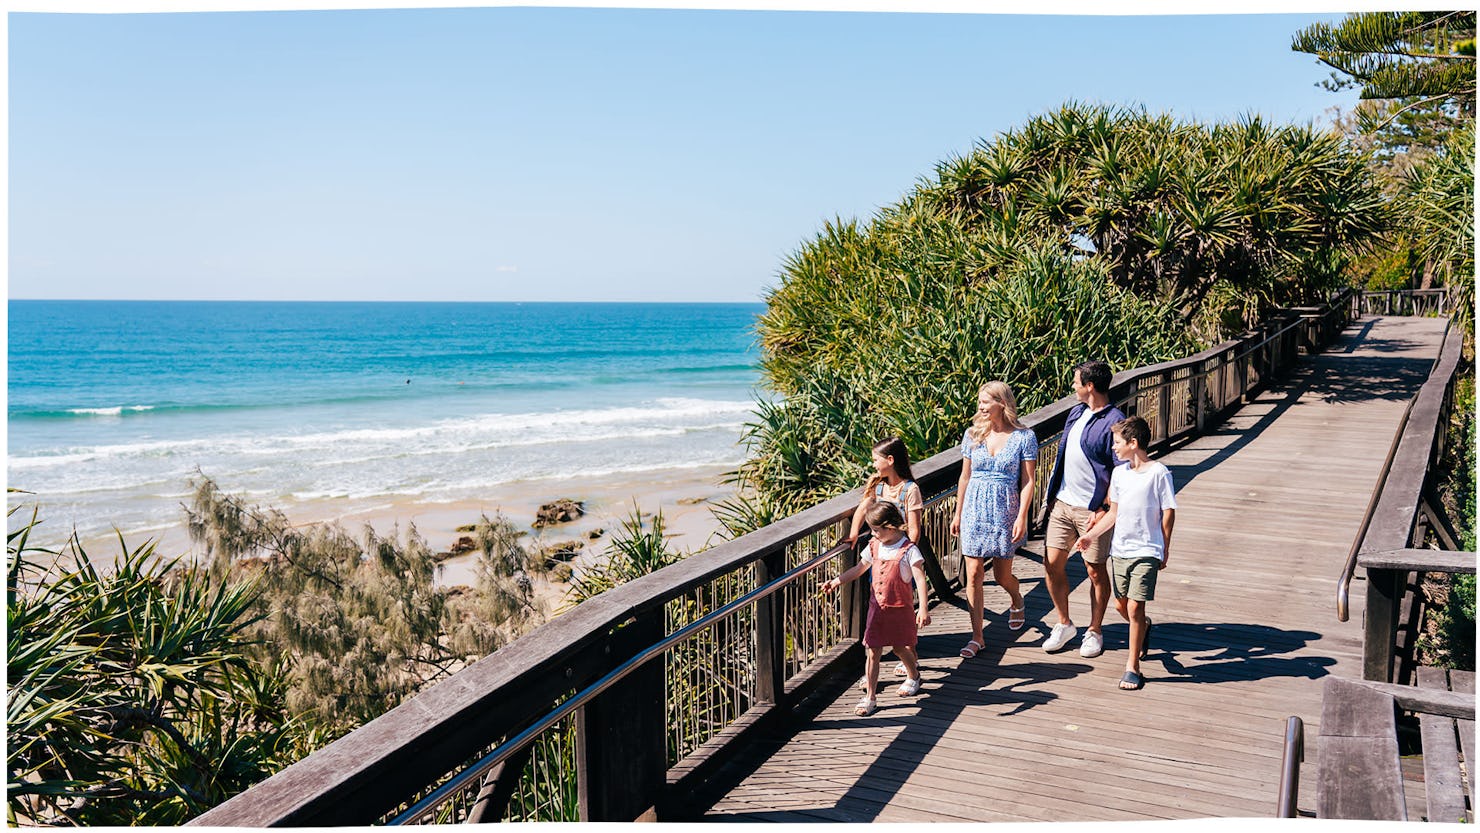 Family on boardwalk at Coolum Beach